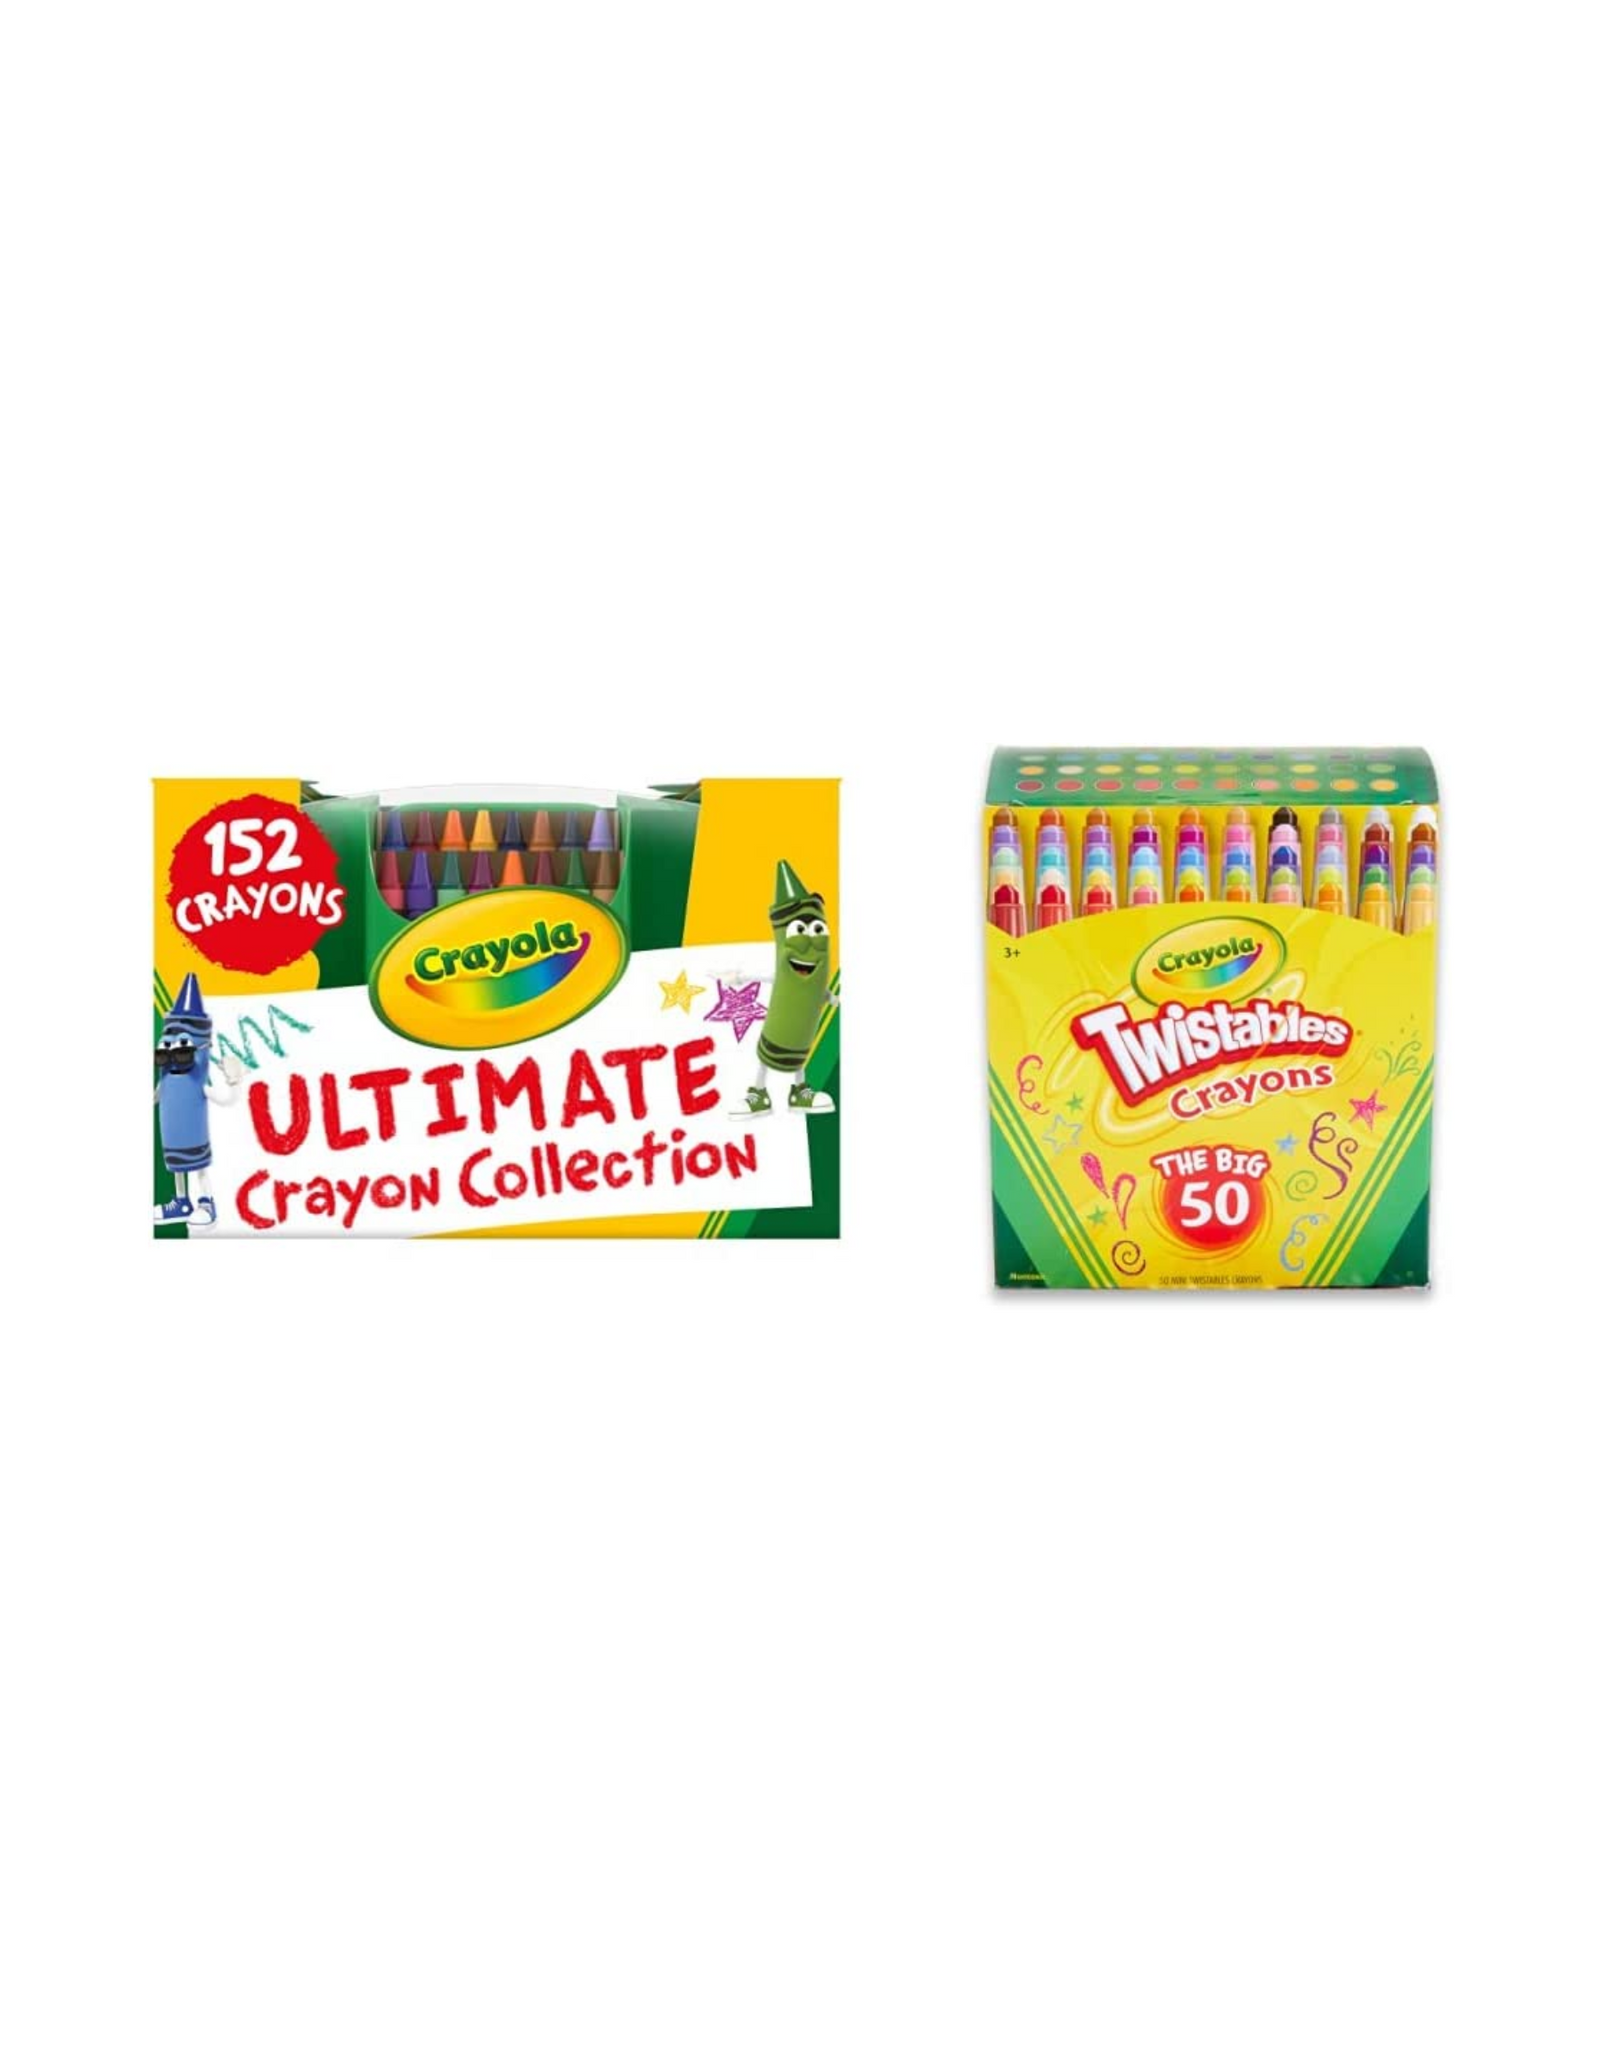 Crayola Ultimate Crayon Collection, Coloring Set, 152 Ct & Crayola Twistables Crayons Coloring Set, 50 Ct